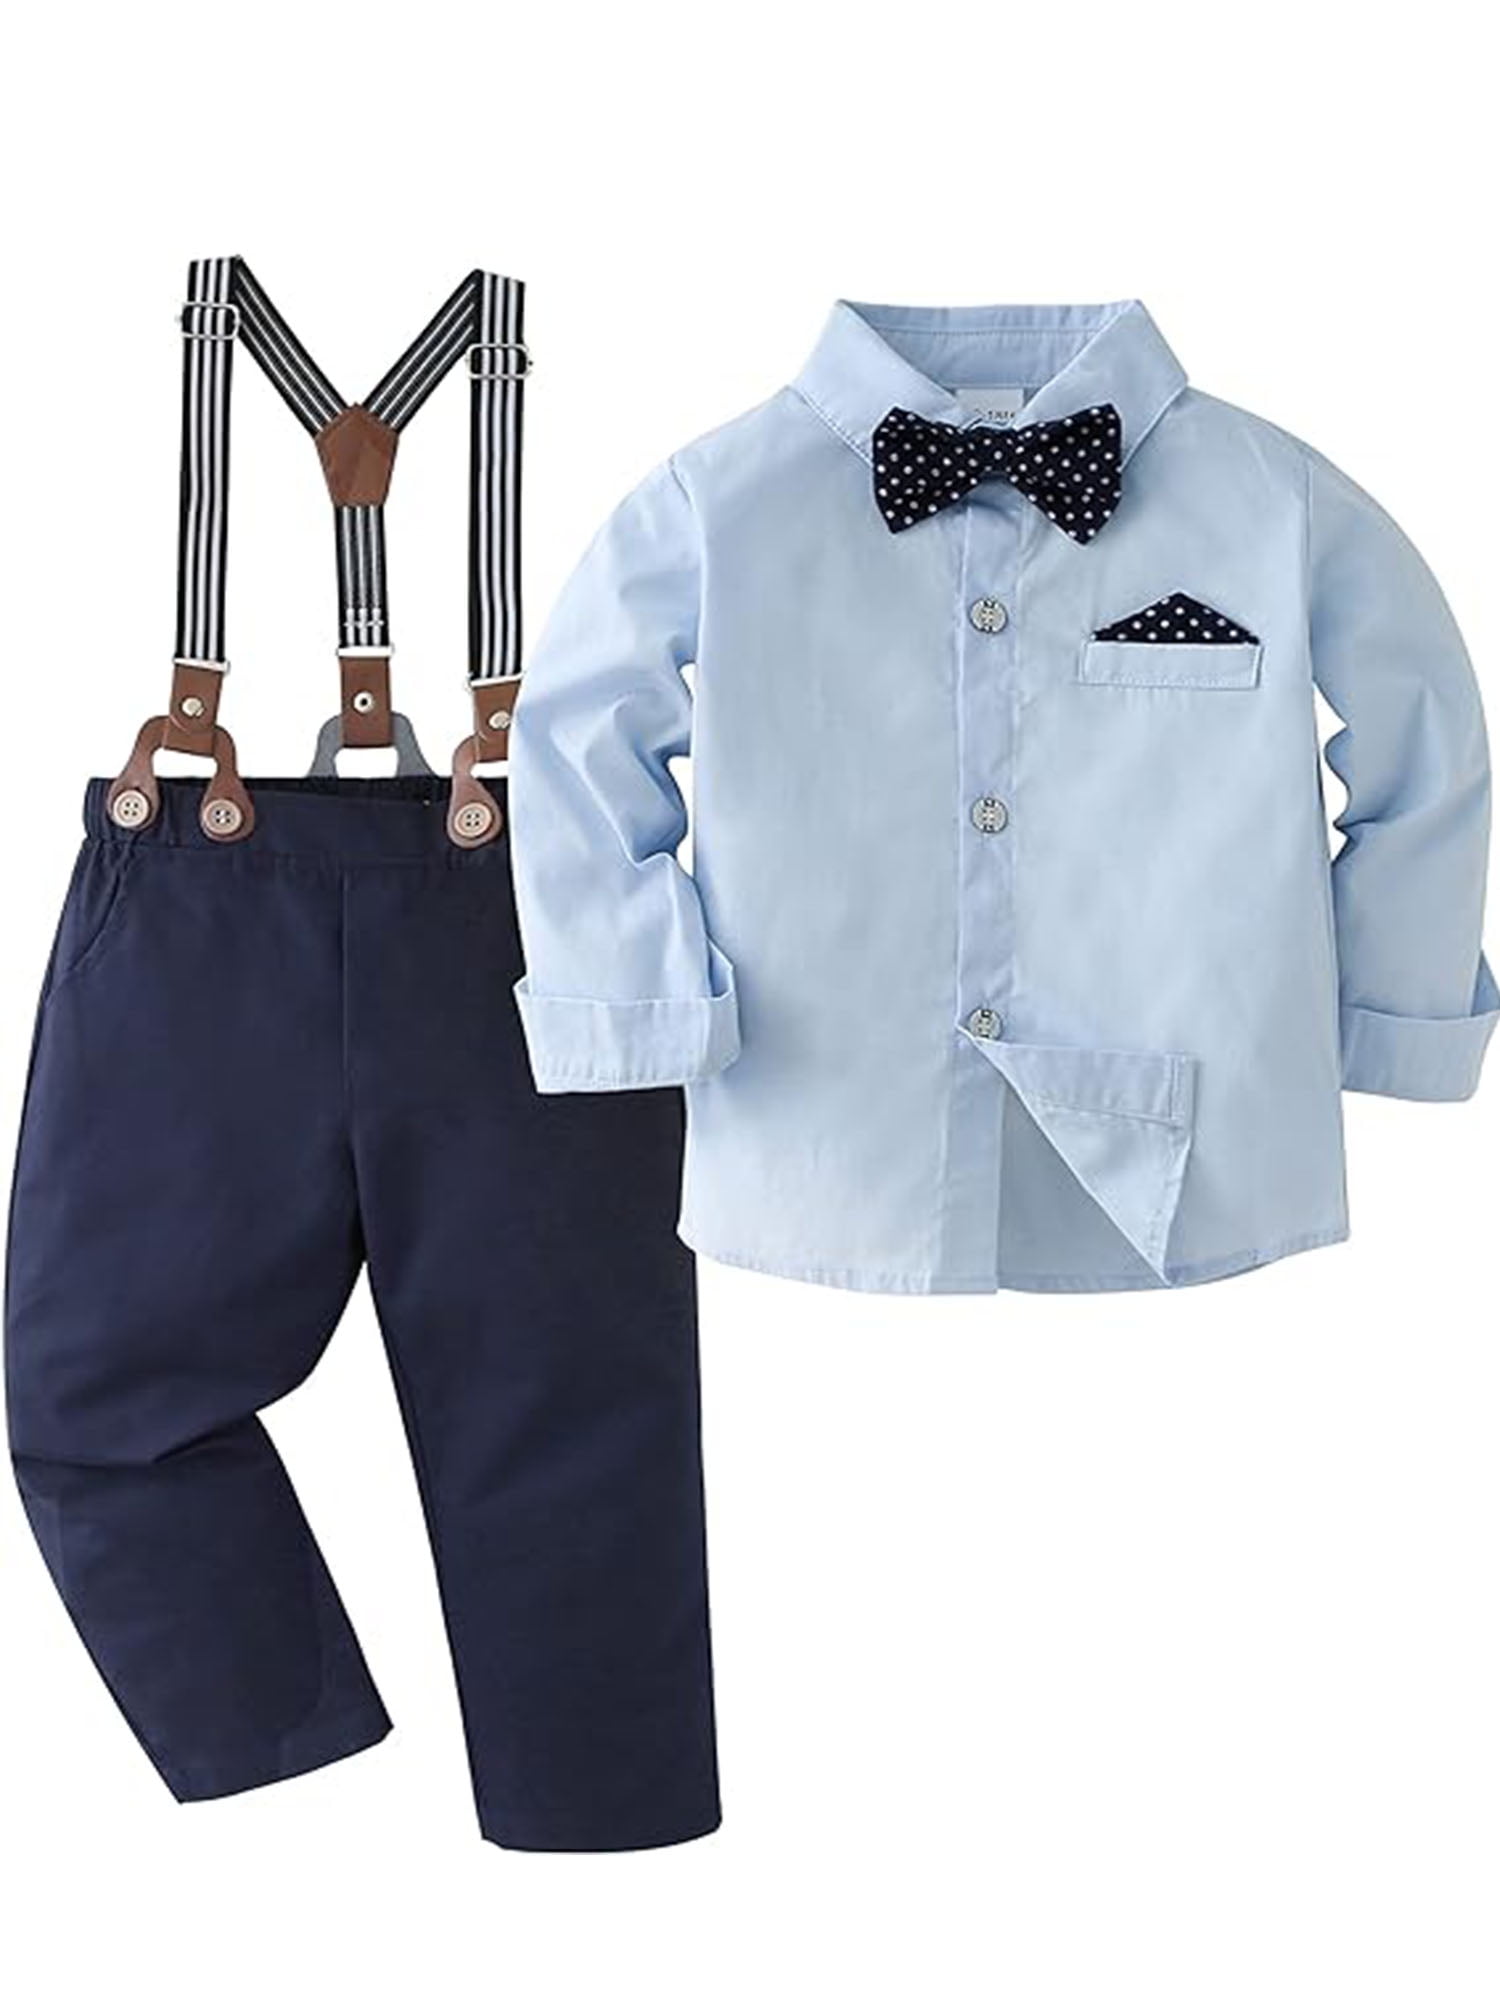 CARETOO Toddler Boy Clothes Set Cotton Fabric Formal Outfits Shirt ...